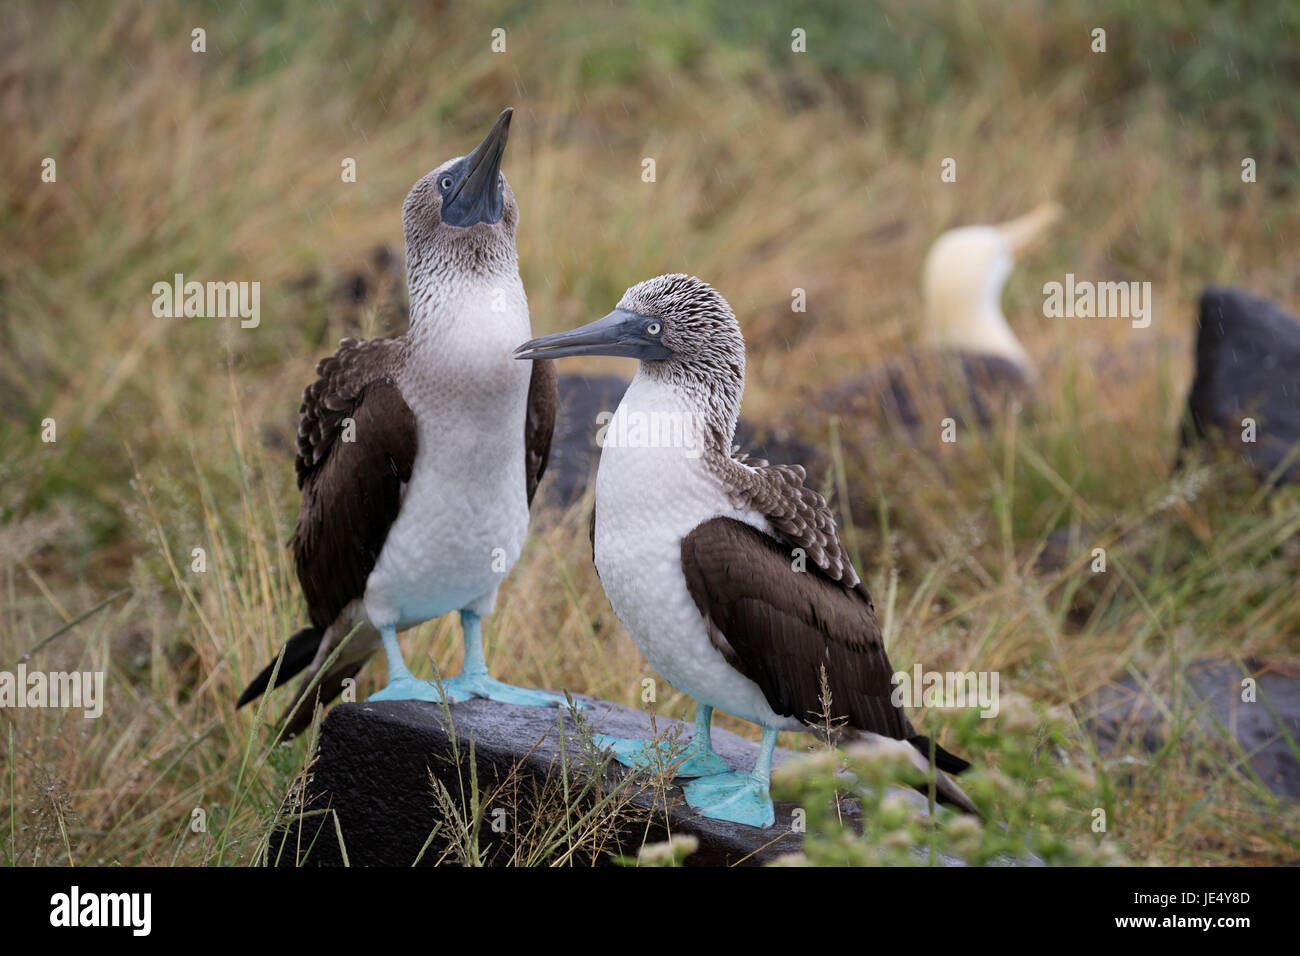 South America, Ecuador, Galapagos Islands, Espanola or Hood Island, Blue footed boobies (Sula nebouxii), courting pair Stock Photo